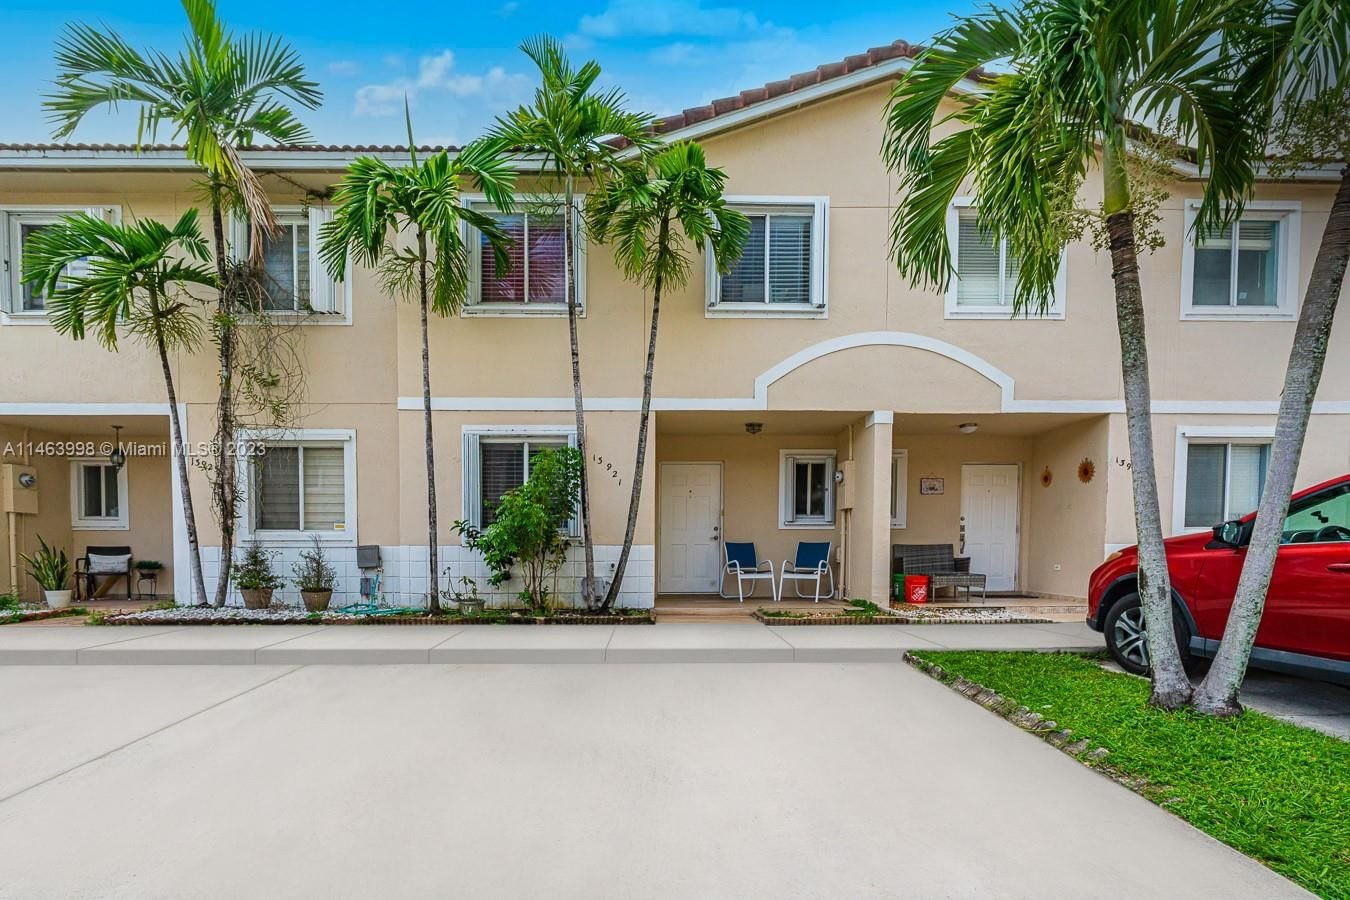 Real estate property located at 13921 175th Ter, Miami-Dade County, Miami, FL